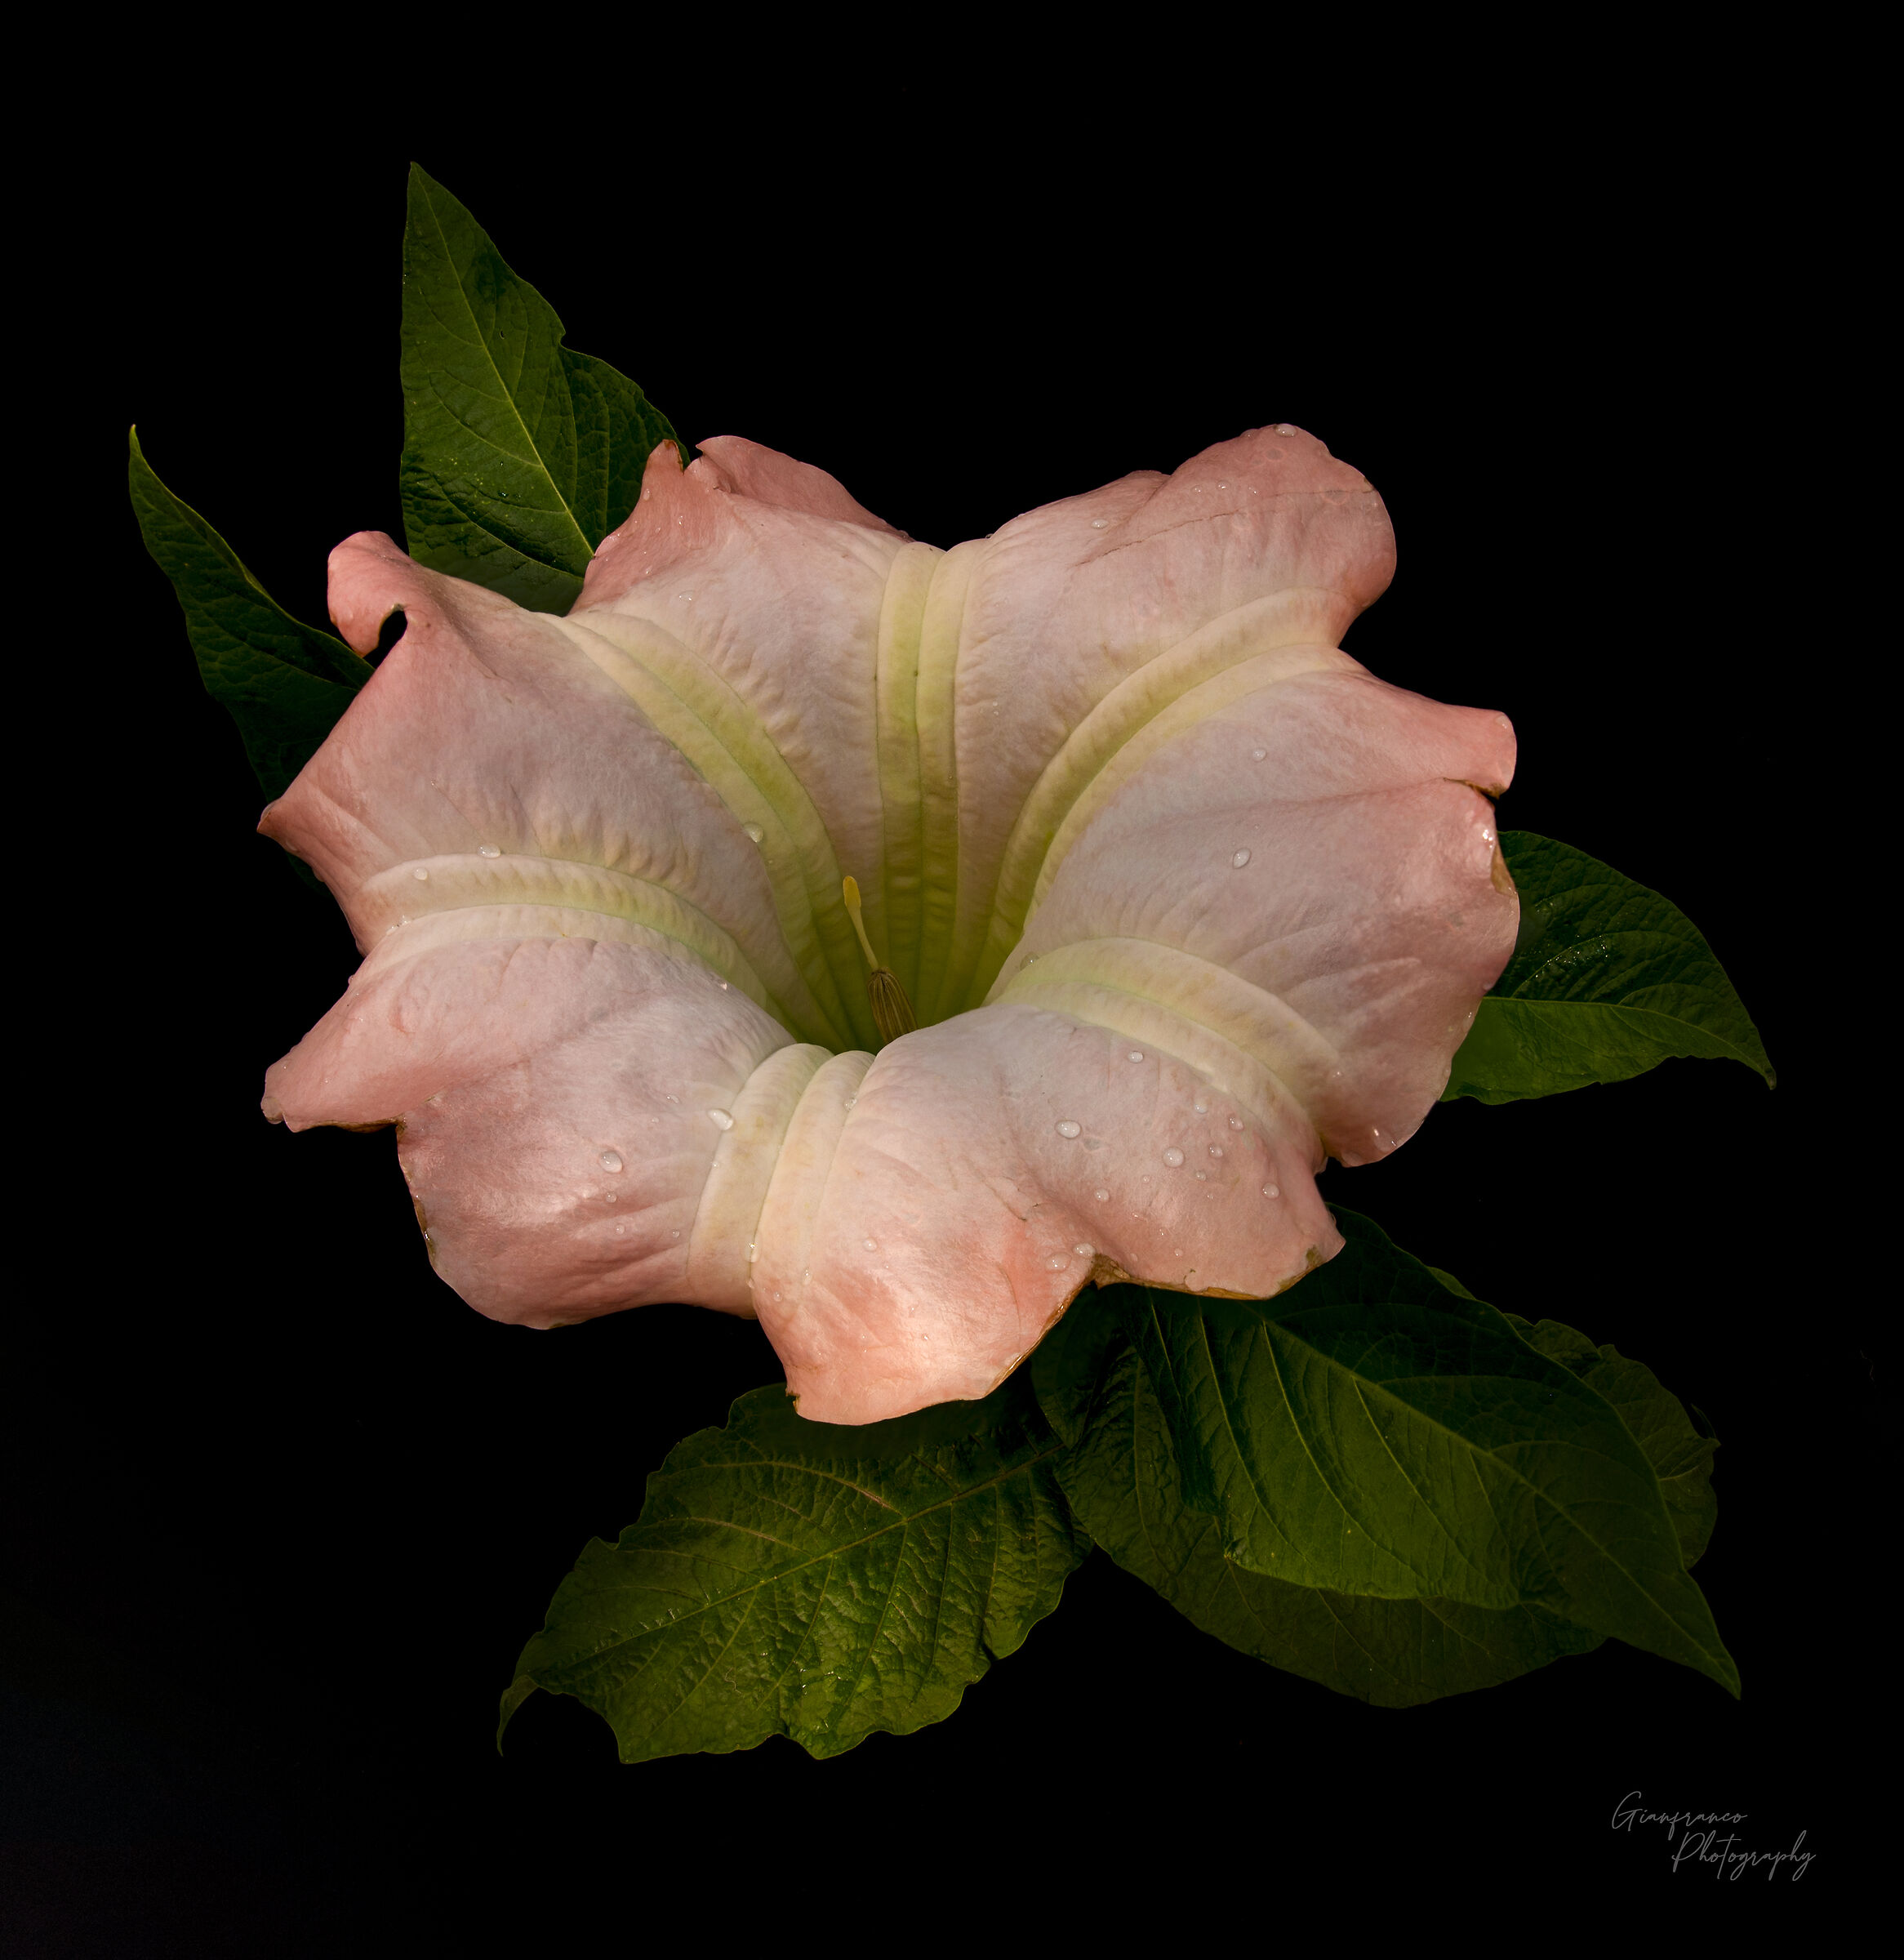 Brugmansia flower...